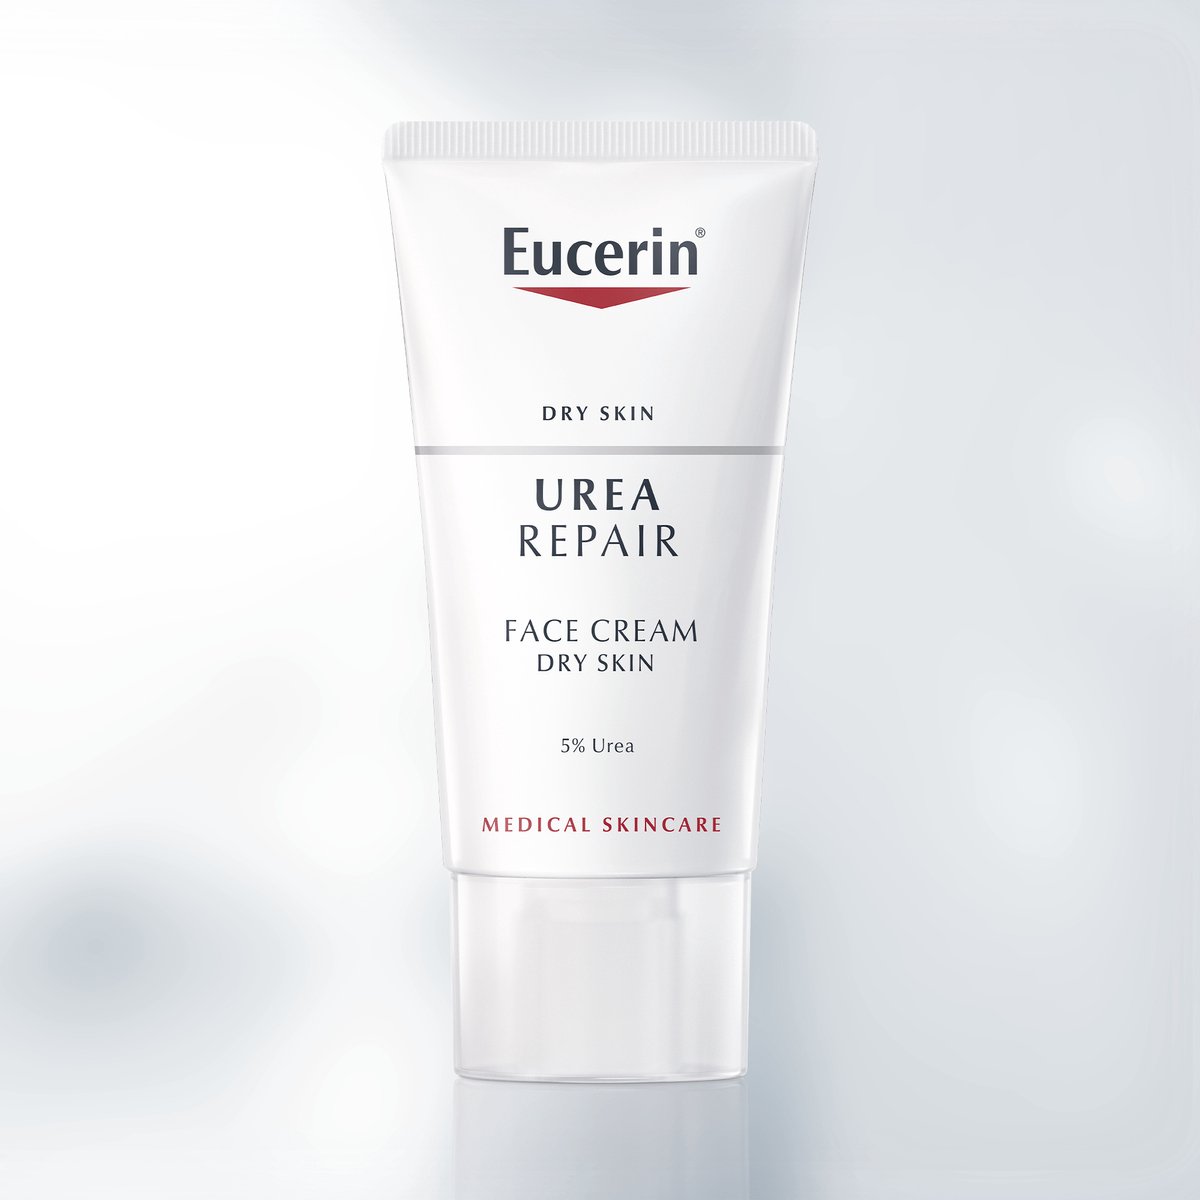 Eucerin gezichtscreme 5% Urea - 50 ml - Dagcrème | bol.com